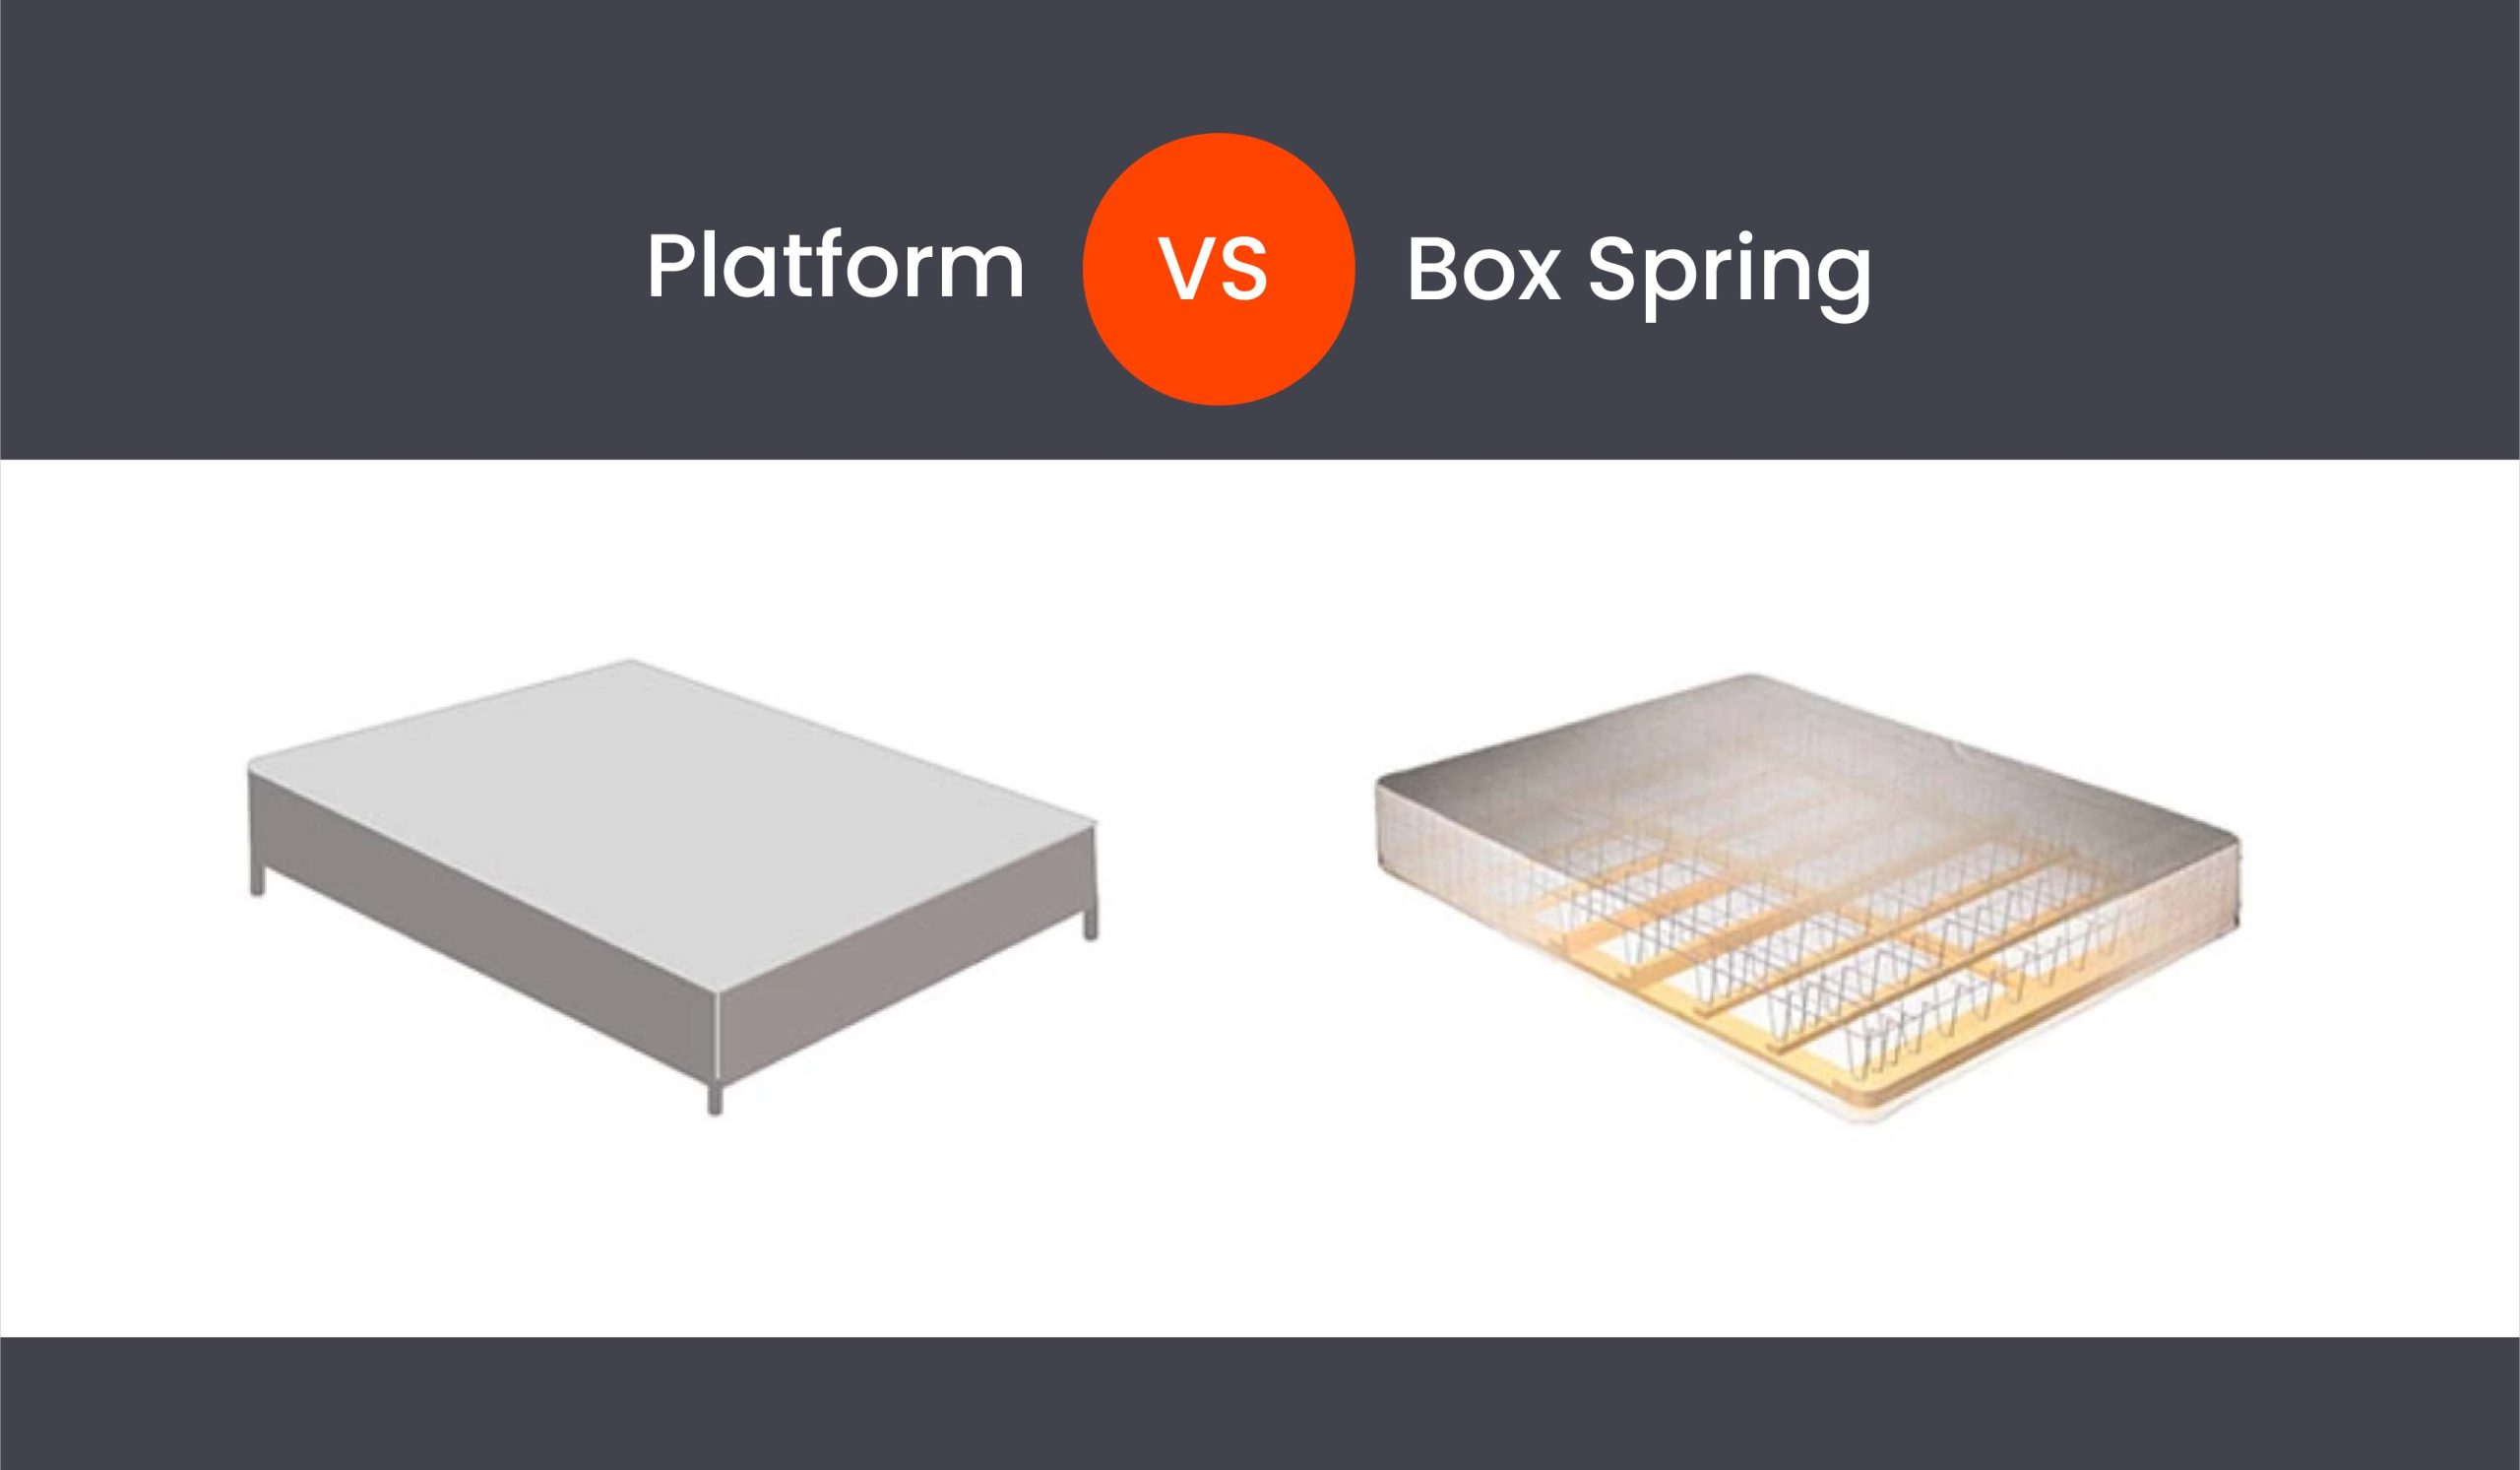 Visual depiction comparing a platform vs. box spring